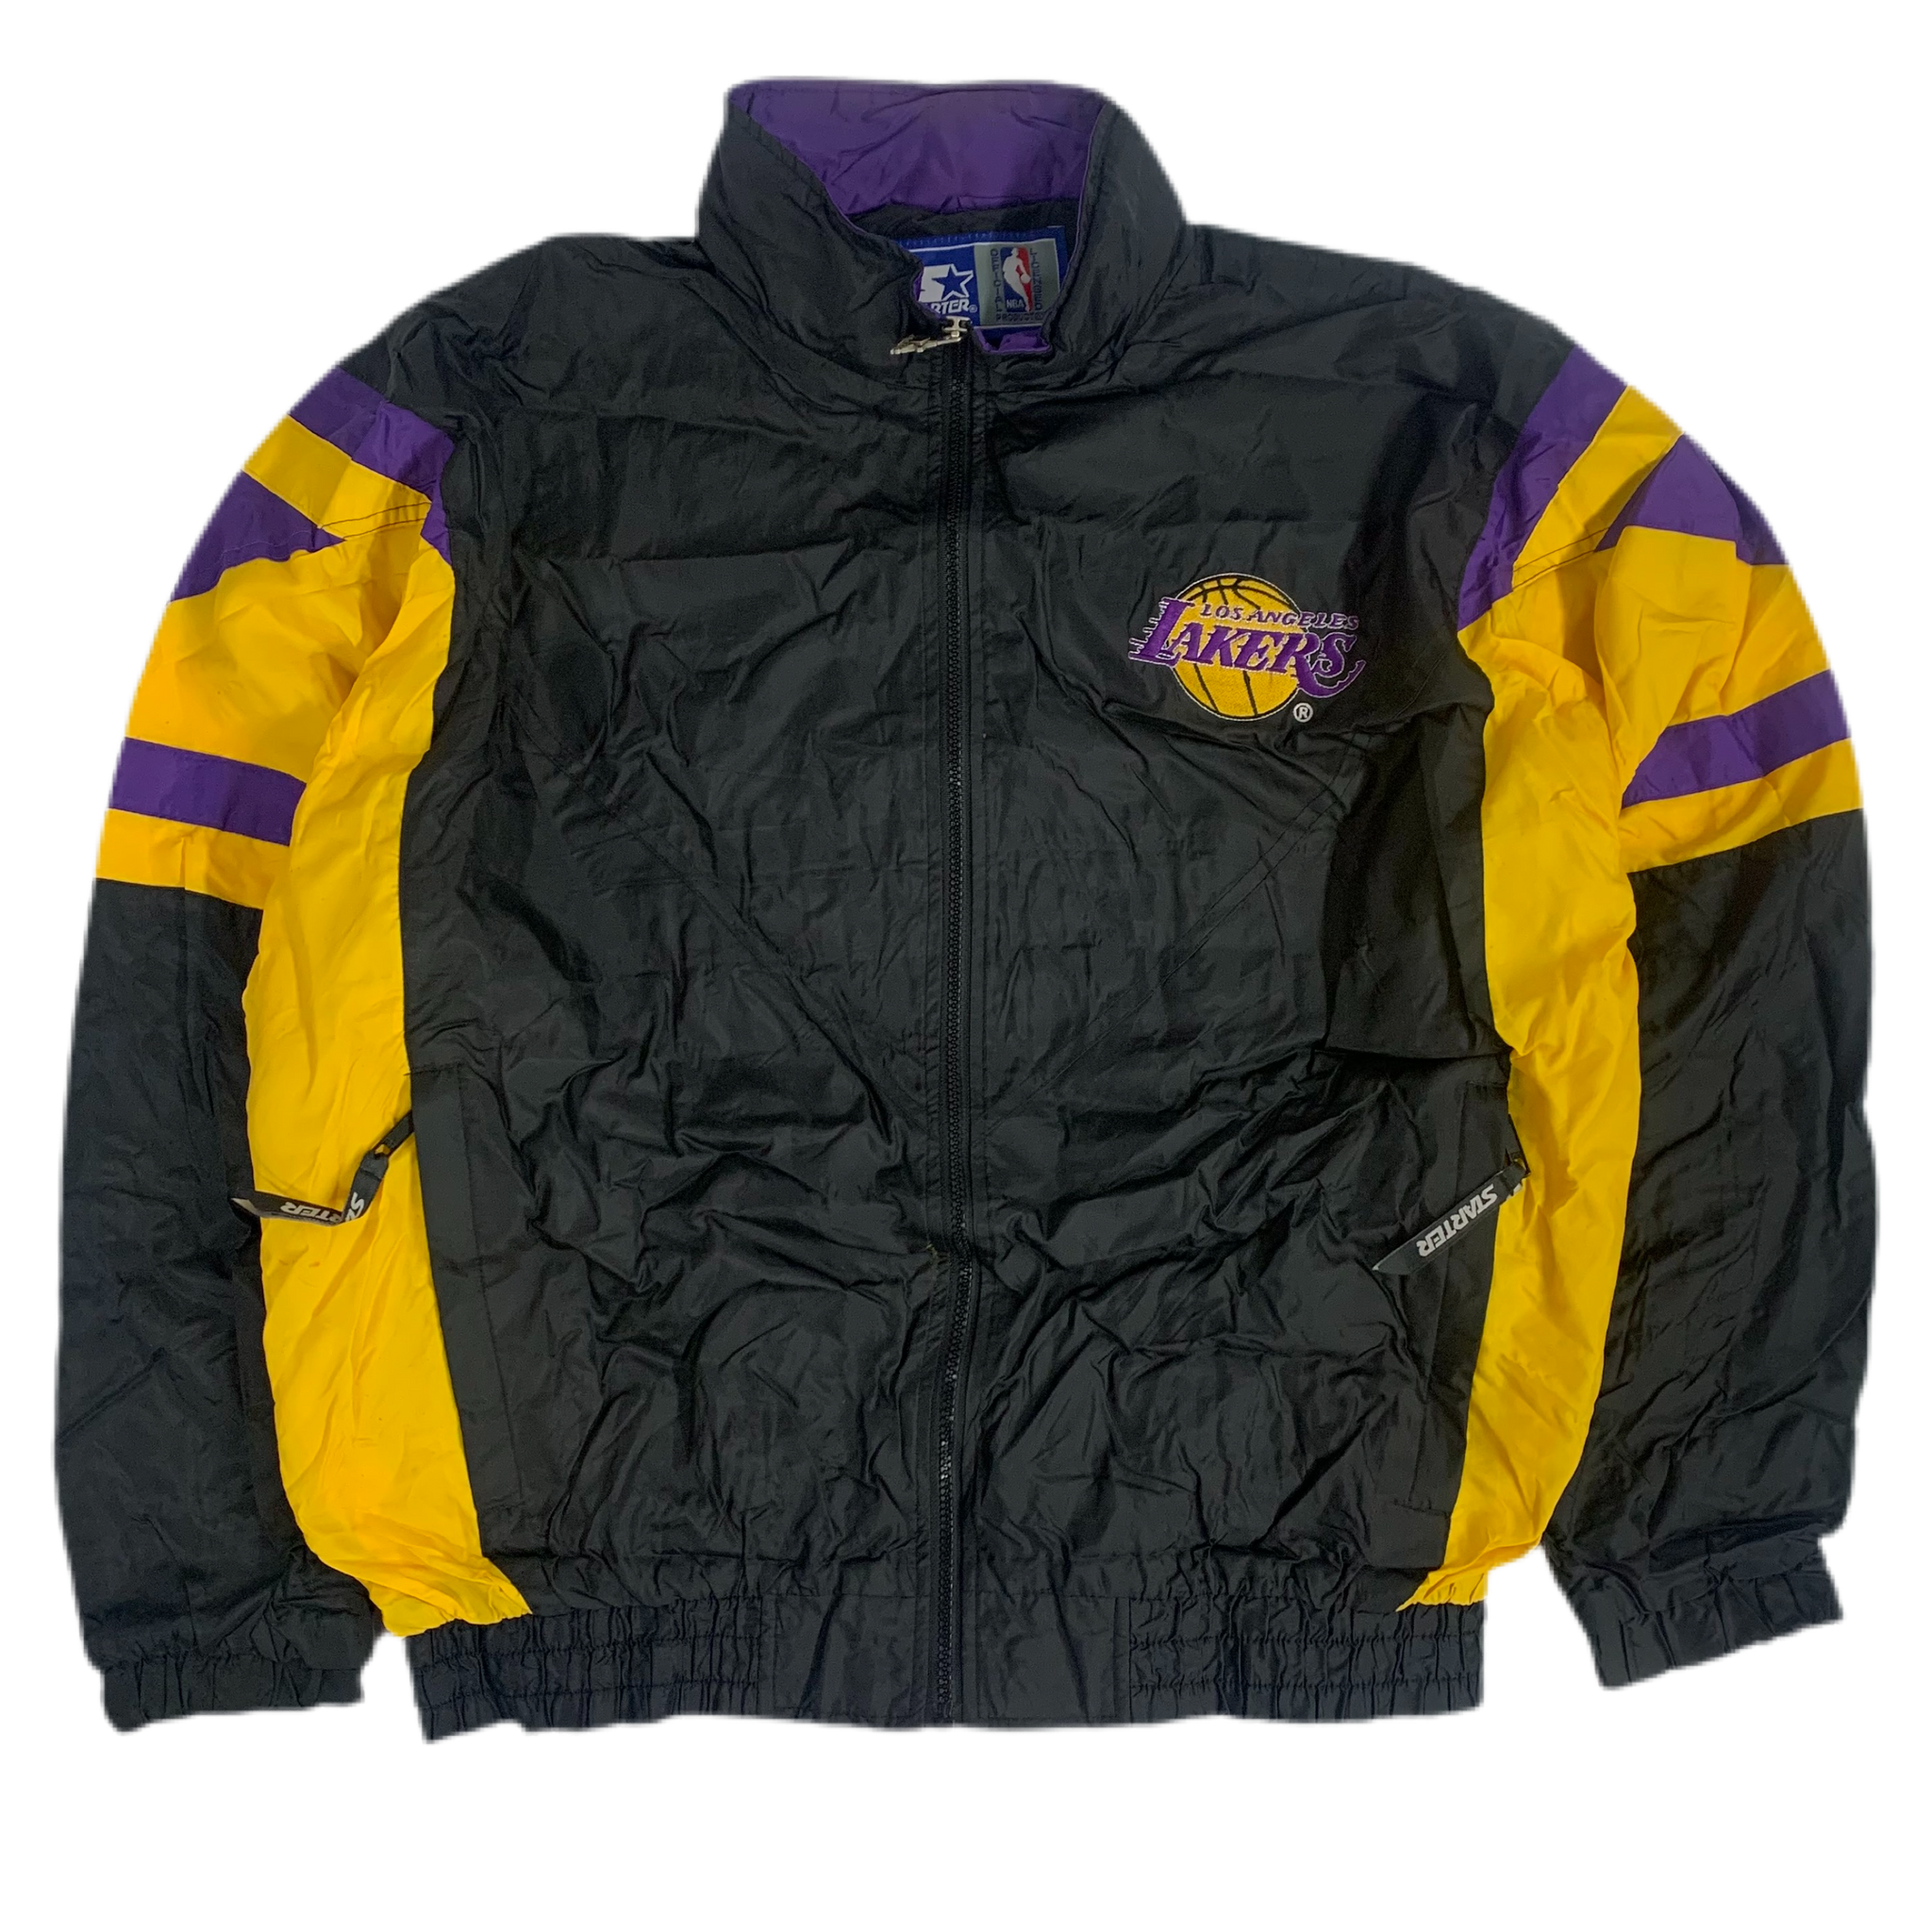 Vintage Lakers starter jacket ! Kobe ,LeBron, LA Lakers for Sale